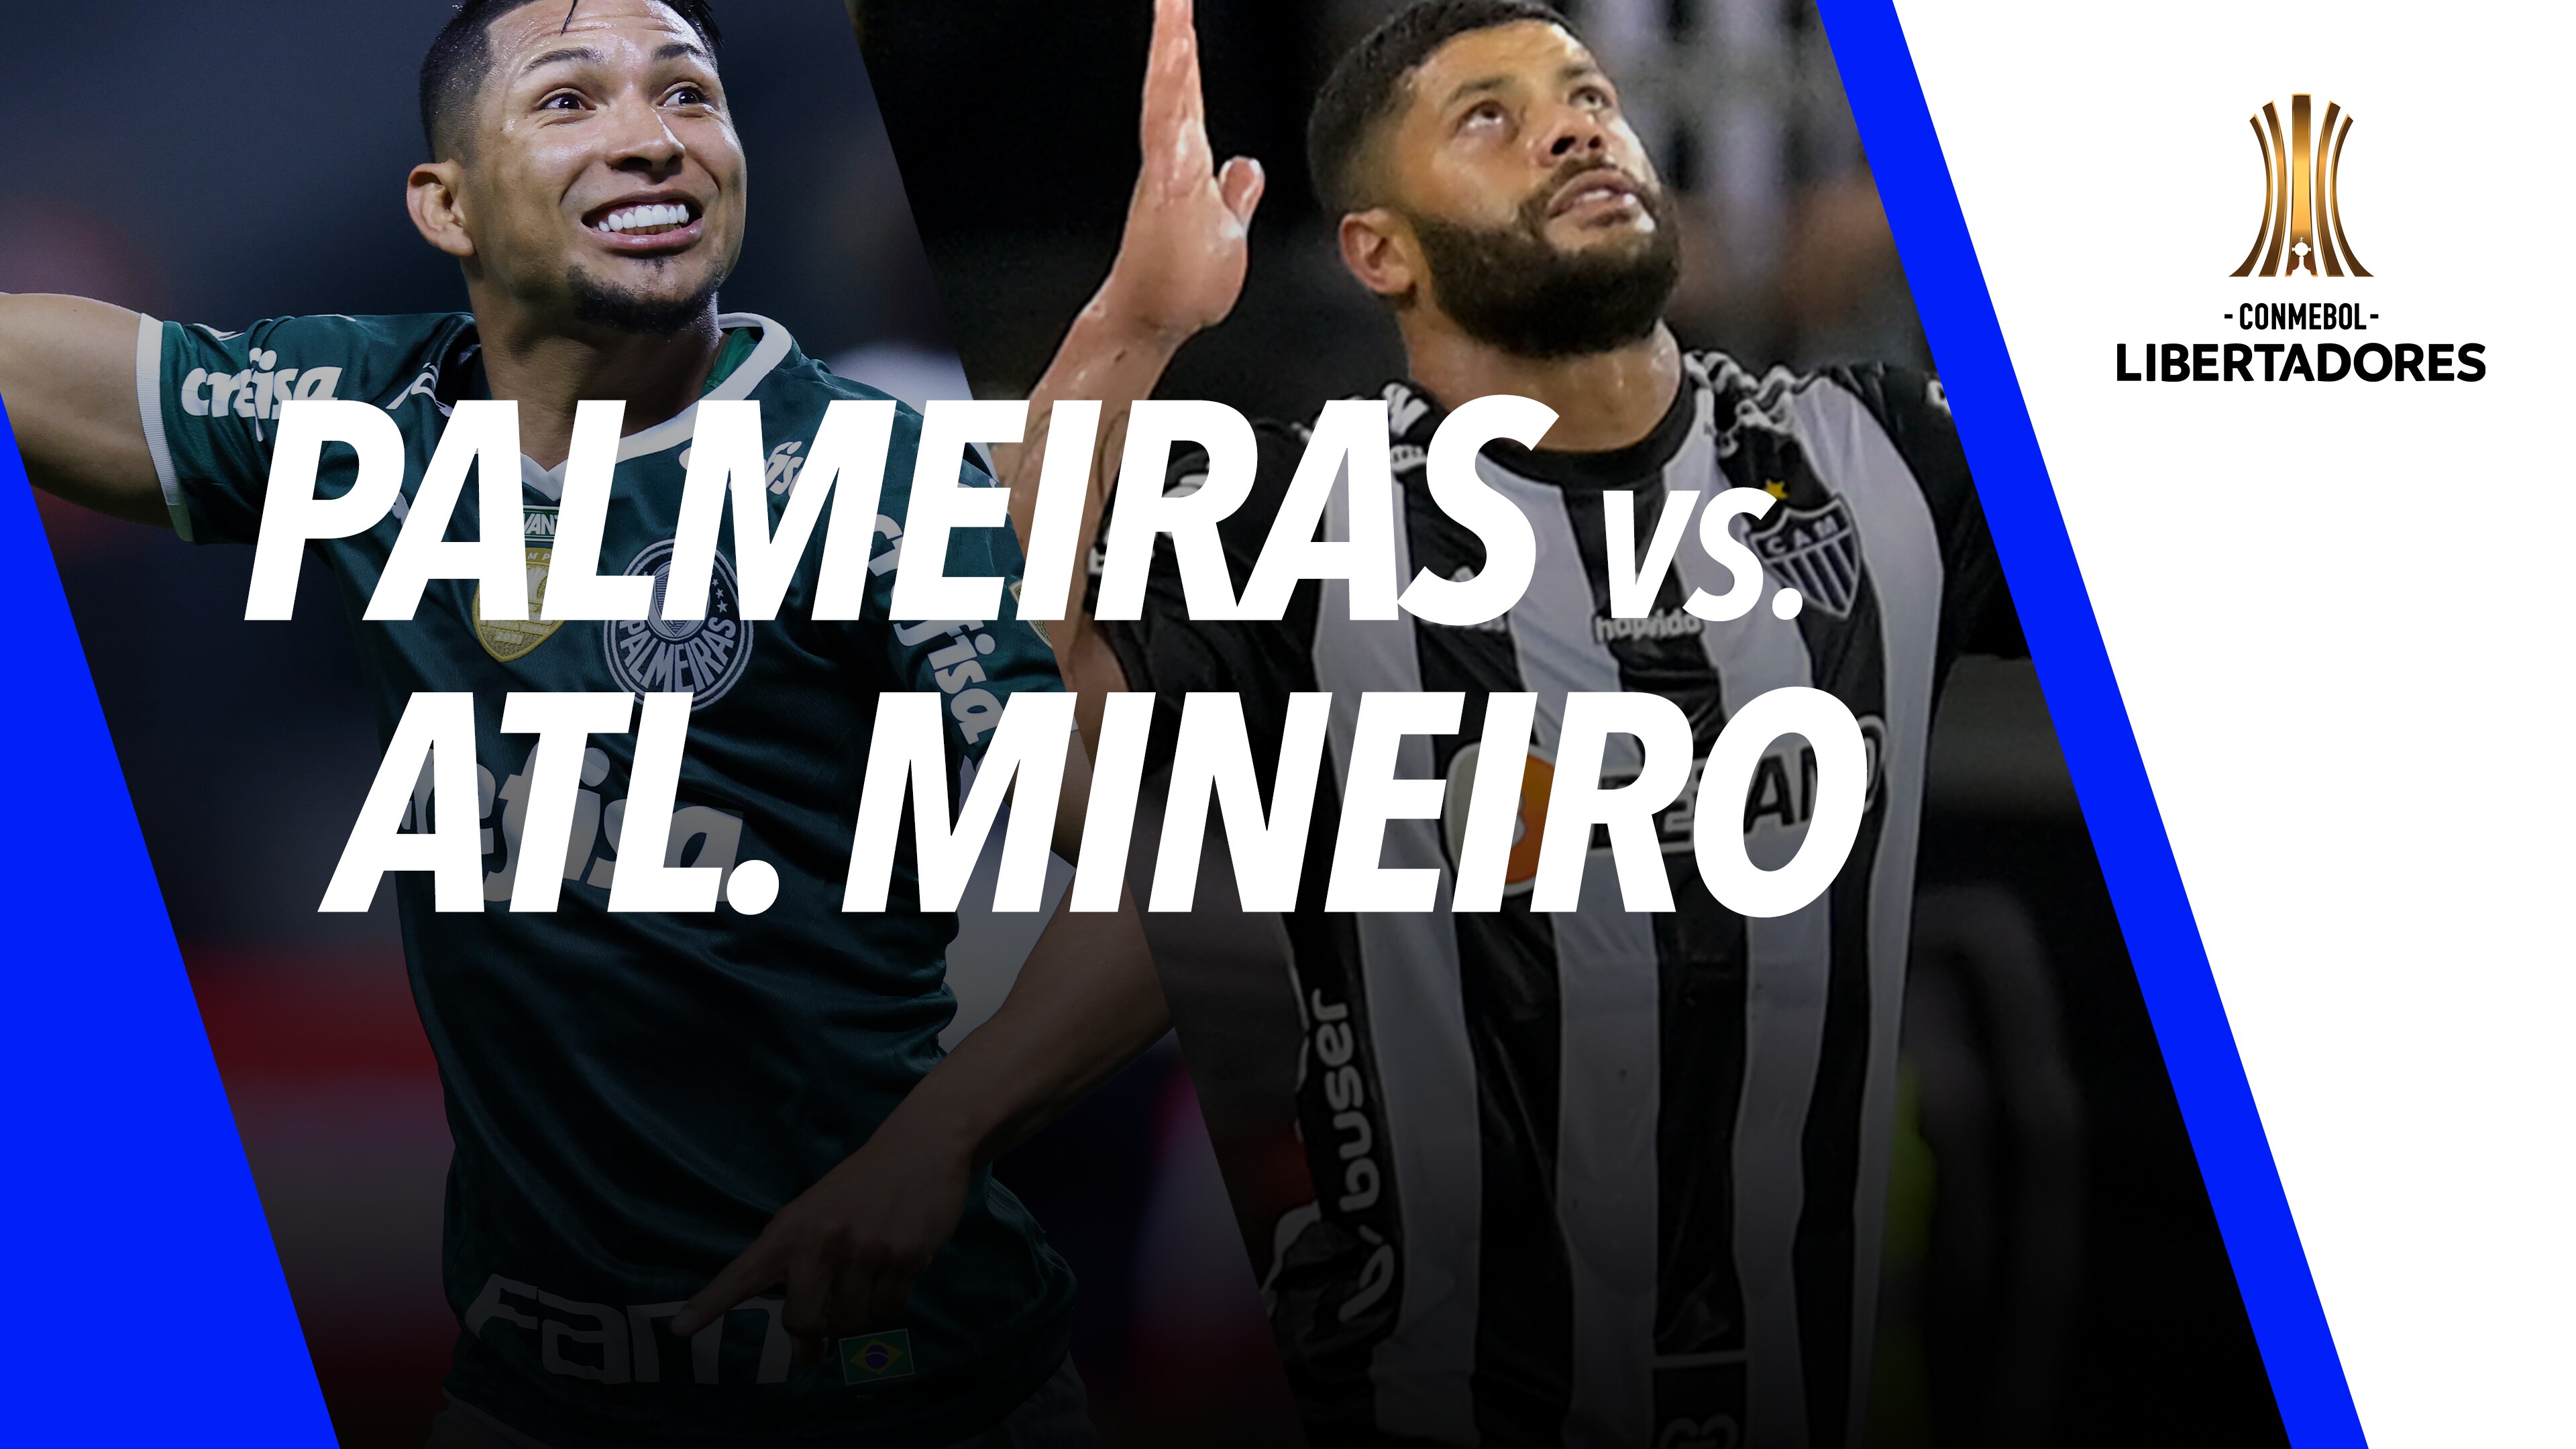 Palmeiras vs Atlético Mineiro en vivo: dónde ver online el partido de cuartos de final de Copa Libertadores 